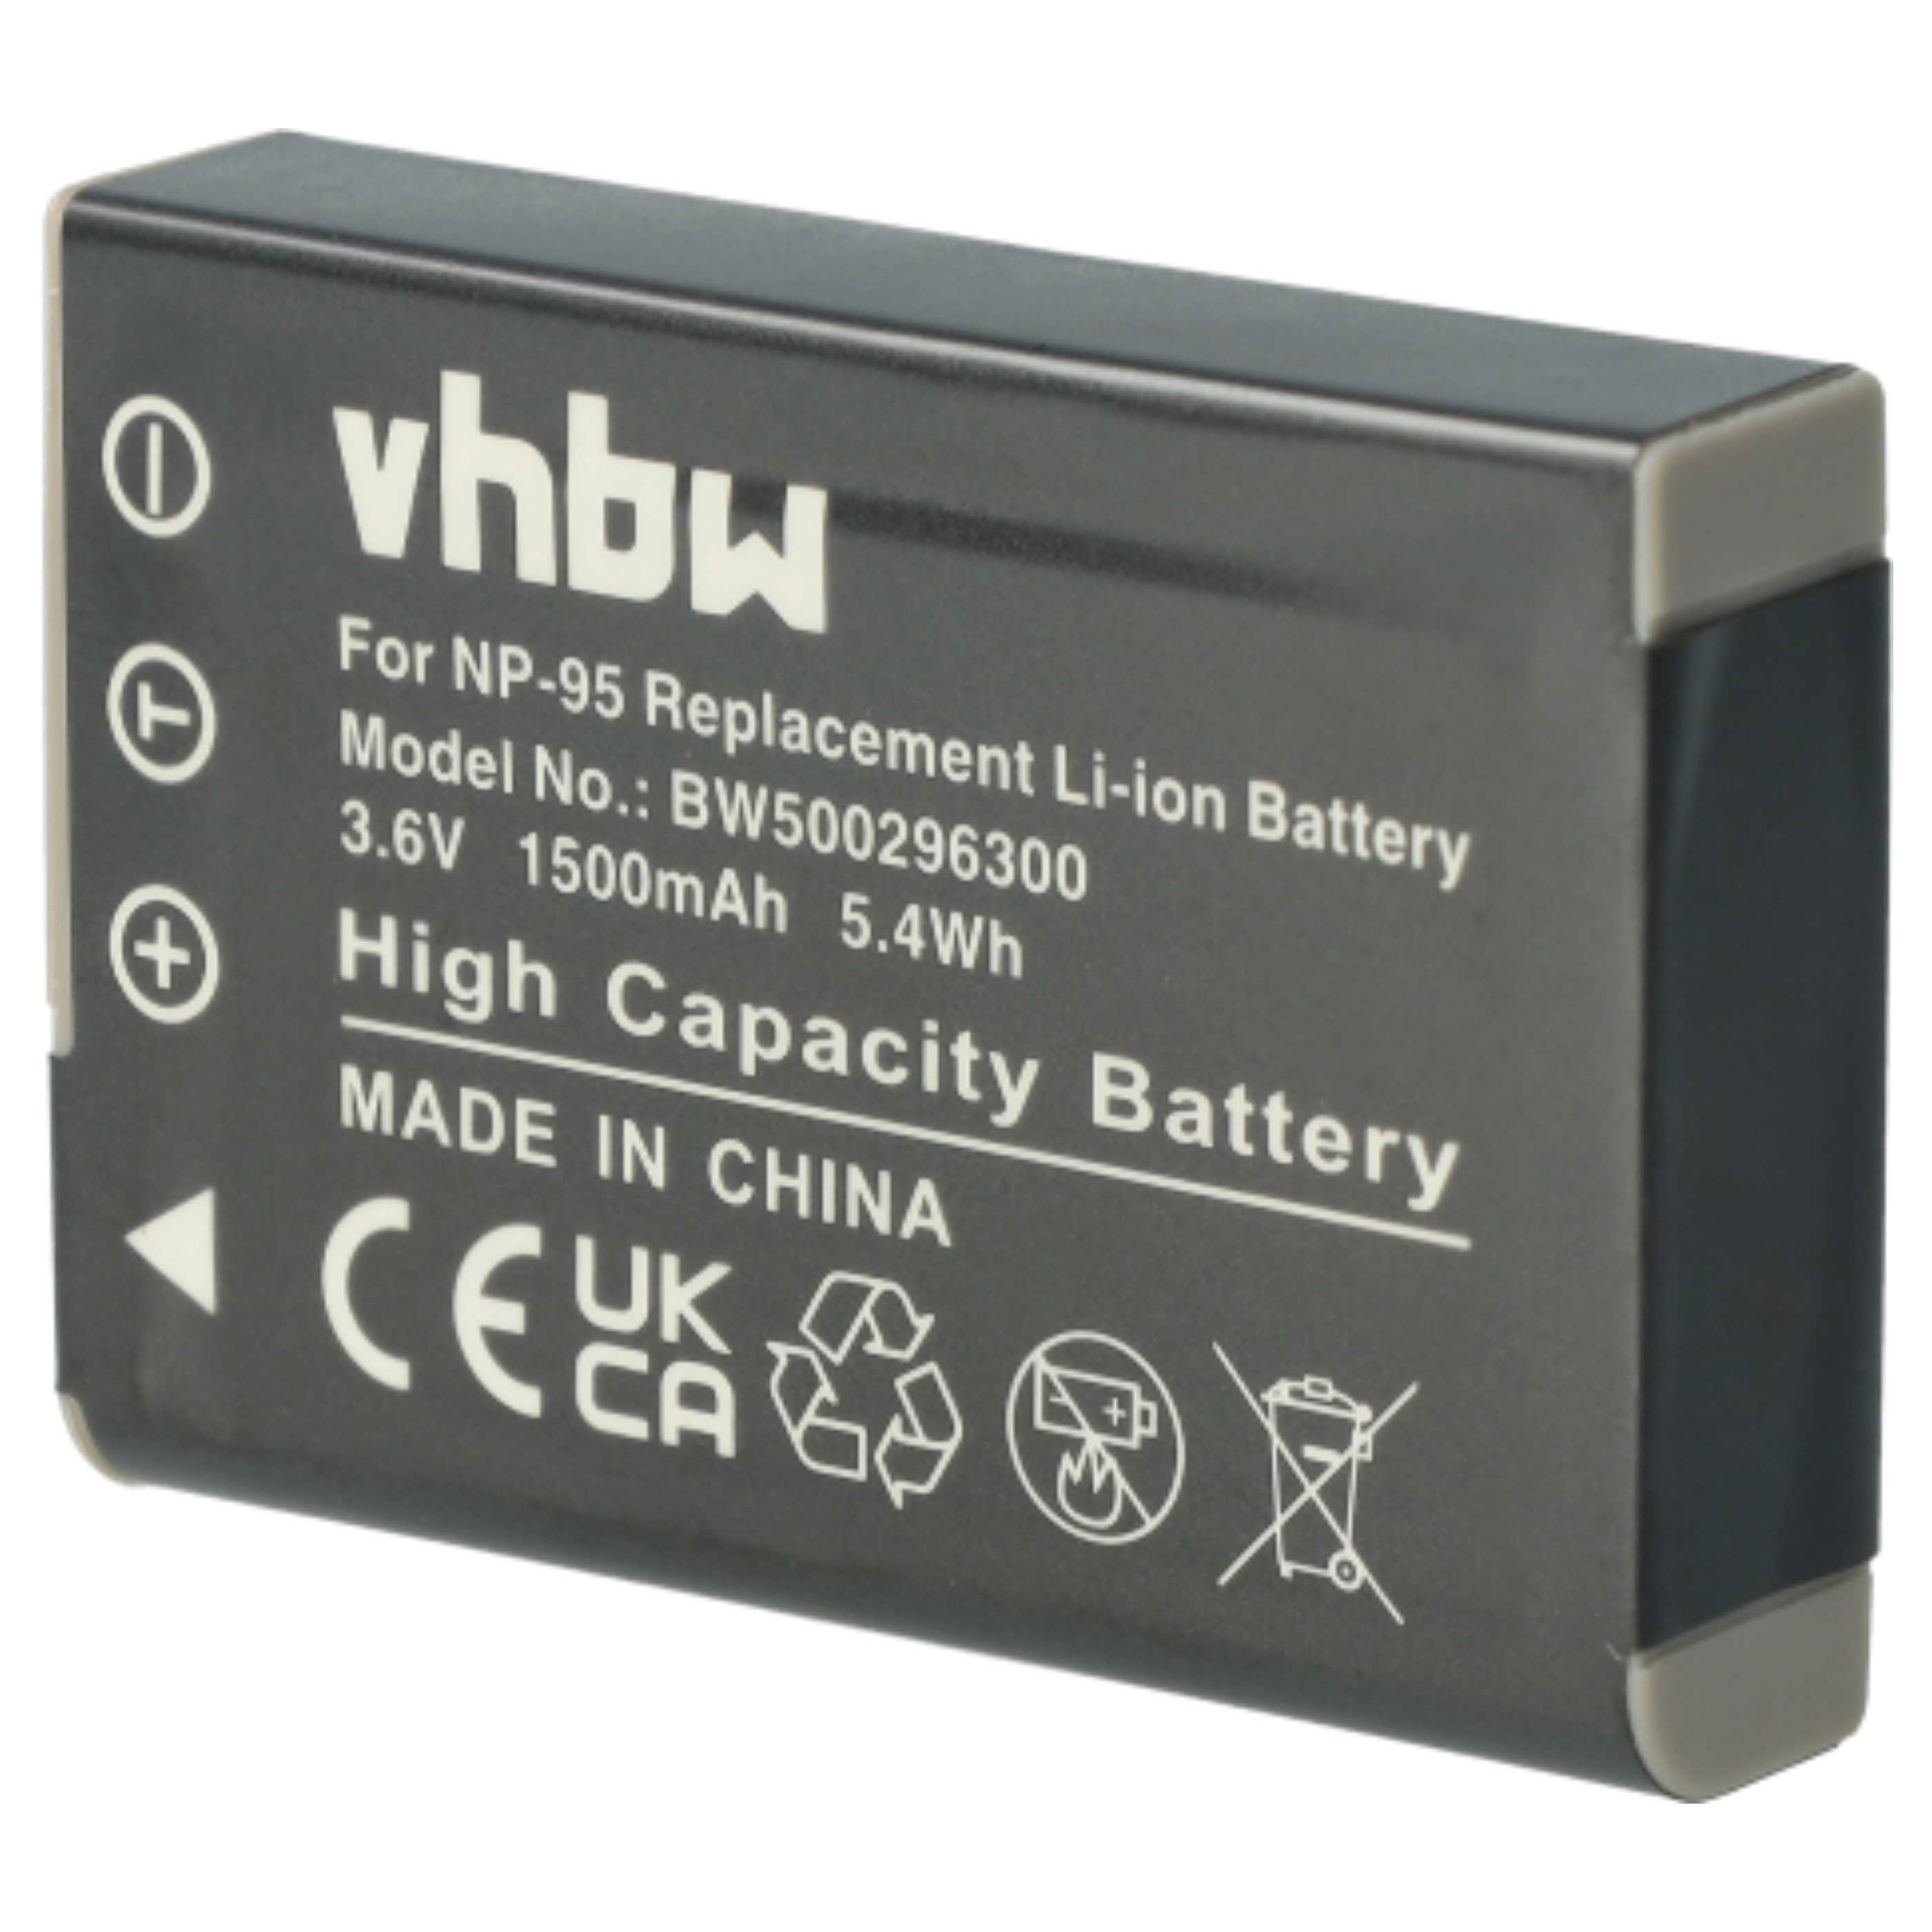 Battery Replacement for Ricoh DB-90 - 1500mAh, 3.6V, Li-Ion